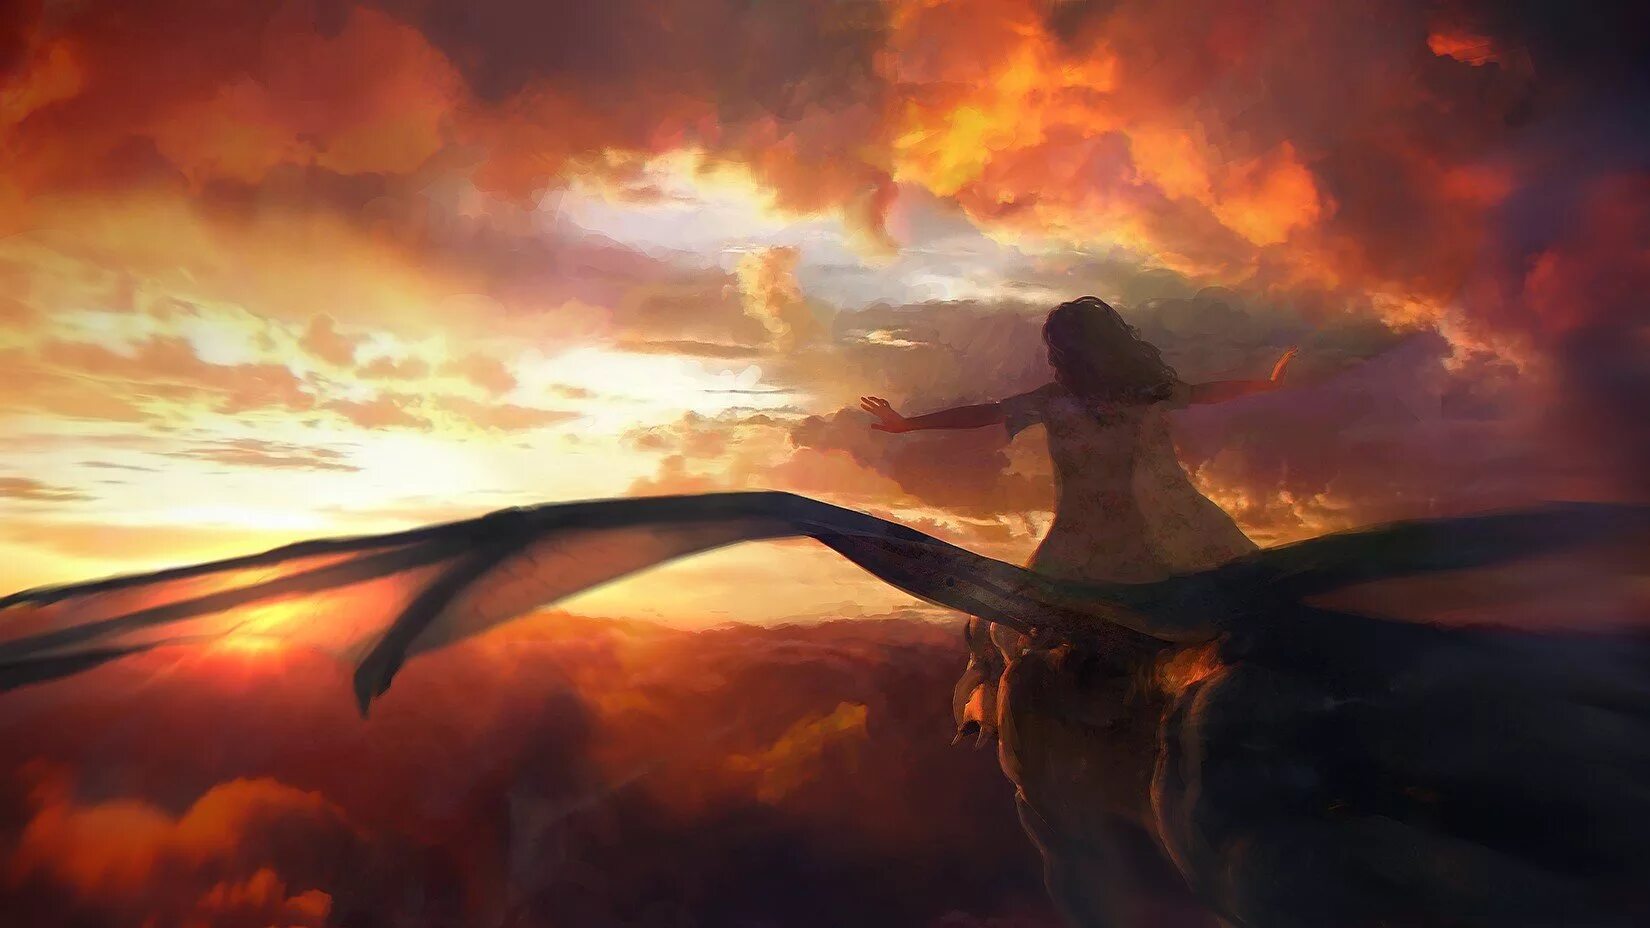 Улетаем в небеса песня слушать. Закат арт. Фантастический закат. Улетающий дракон на закате. Девушка птица арт.